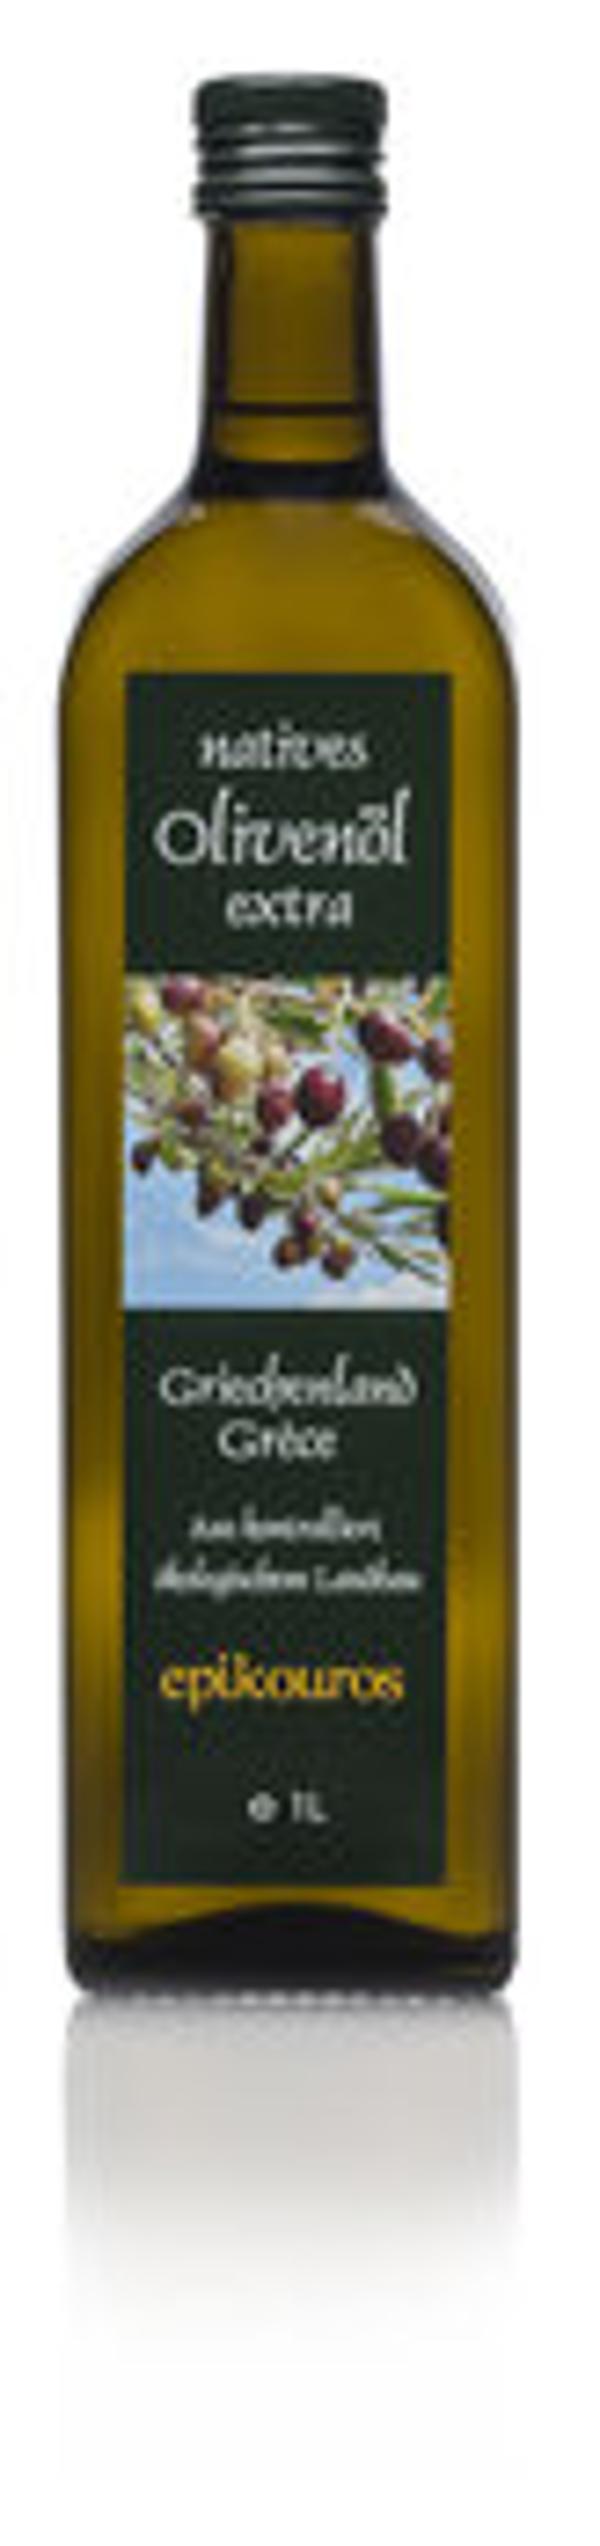 Produktfoto zu Olivenöl extra nativ, 1 l